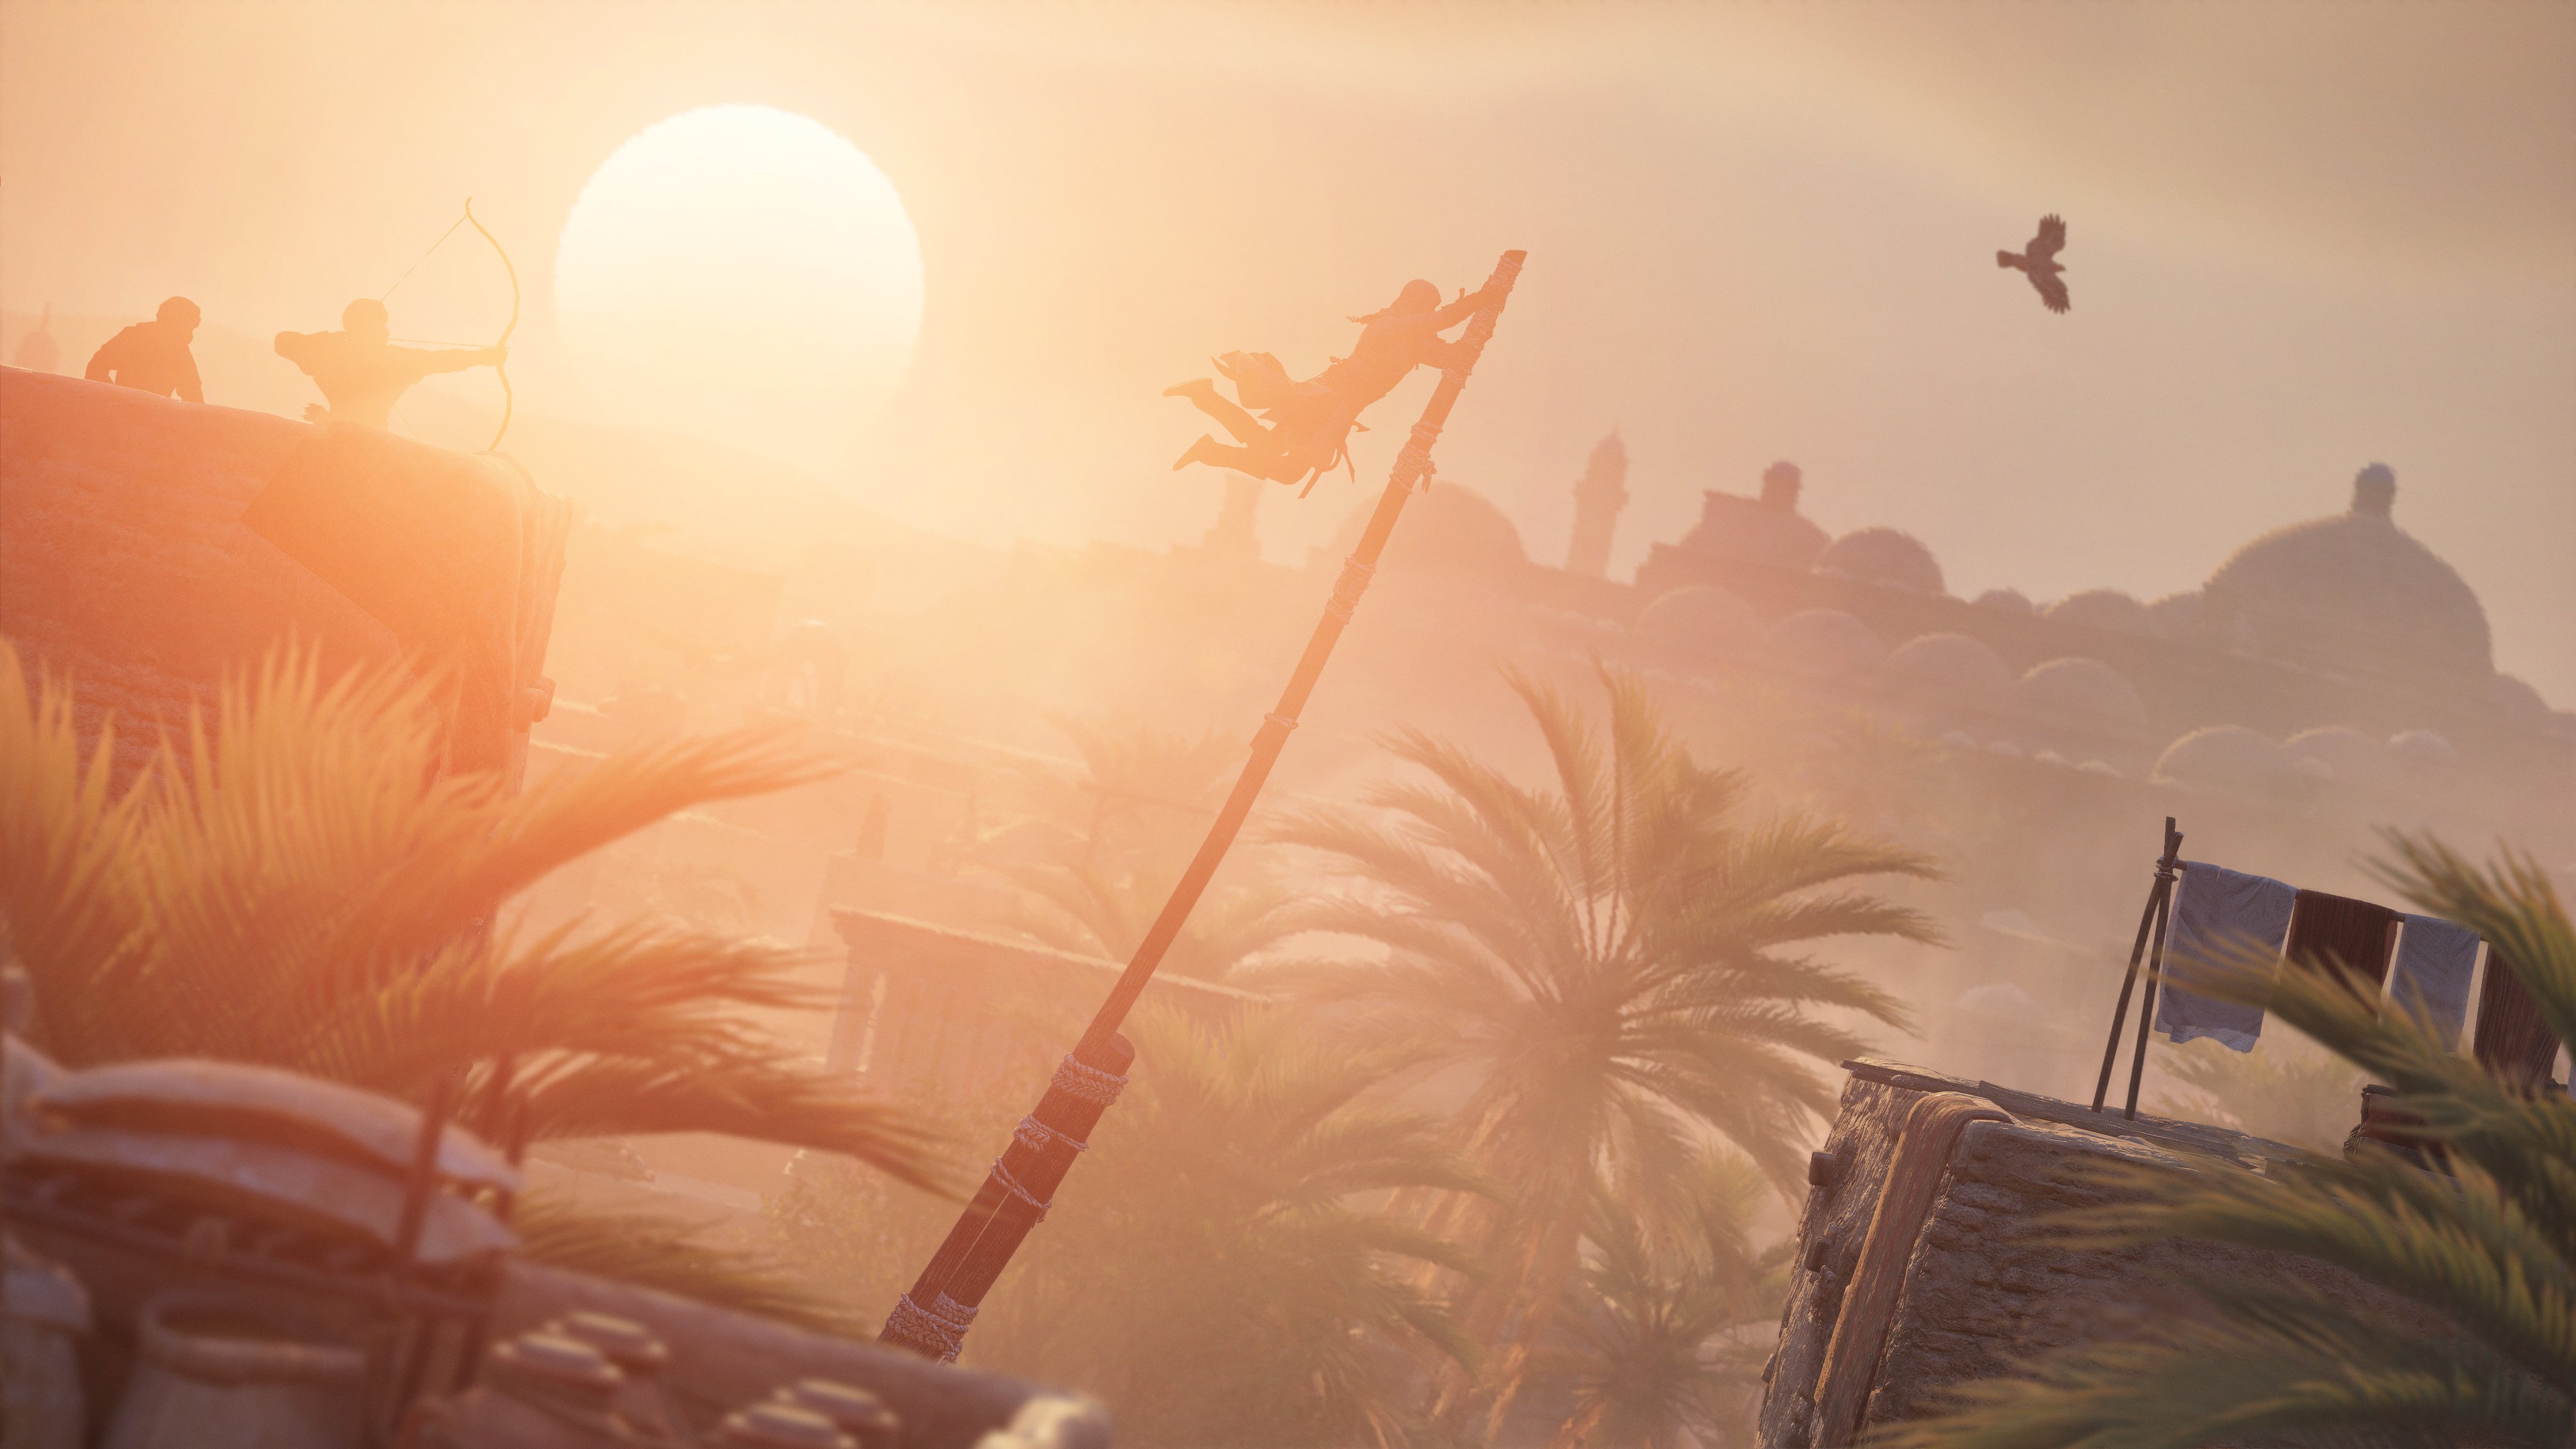 Assassin's Creed Assassin's Creed Mirage | Offizielle Screenshots